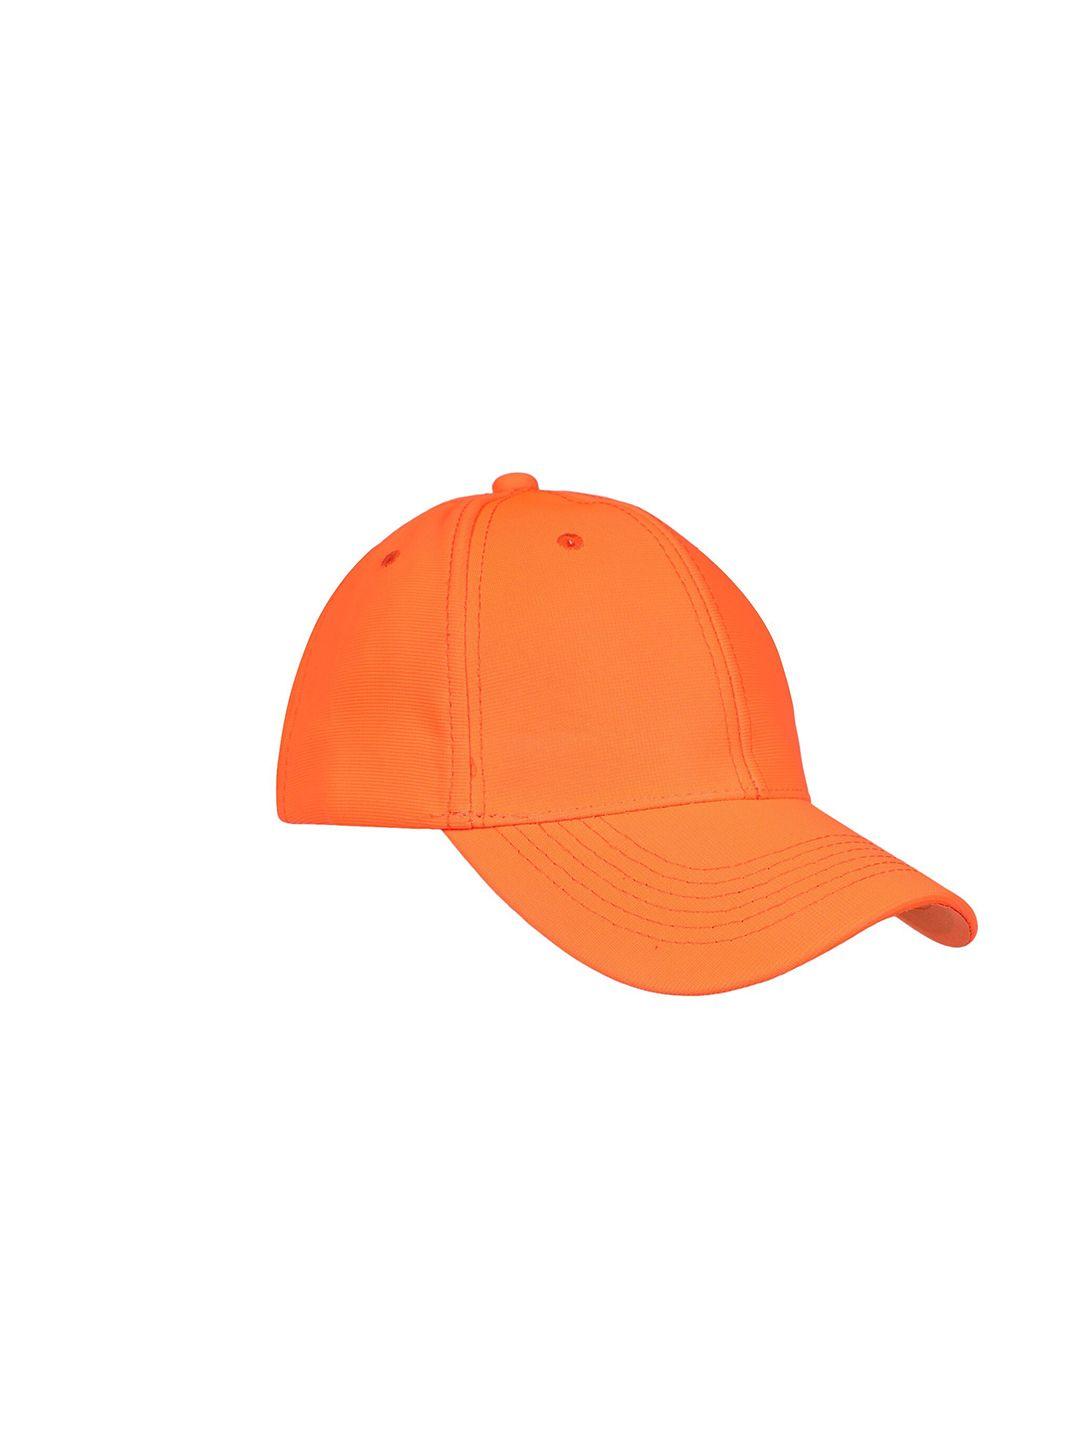 fabseasons unisex orange baseball cap